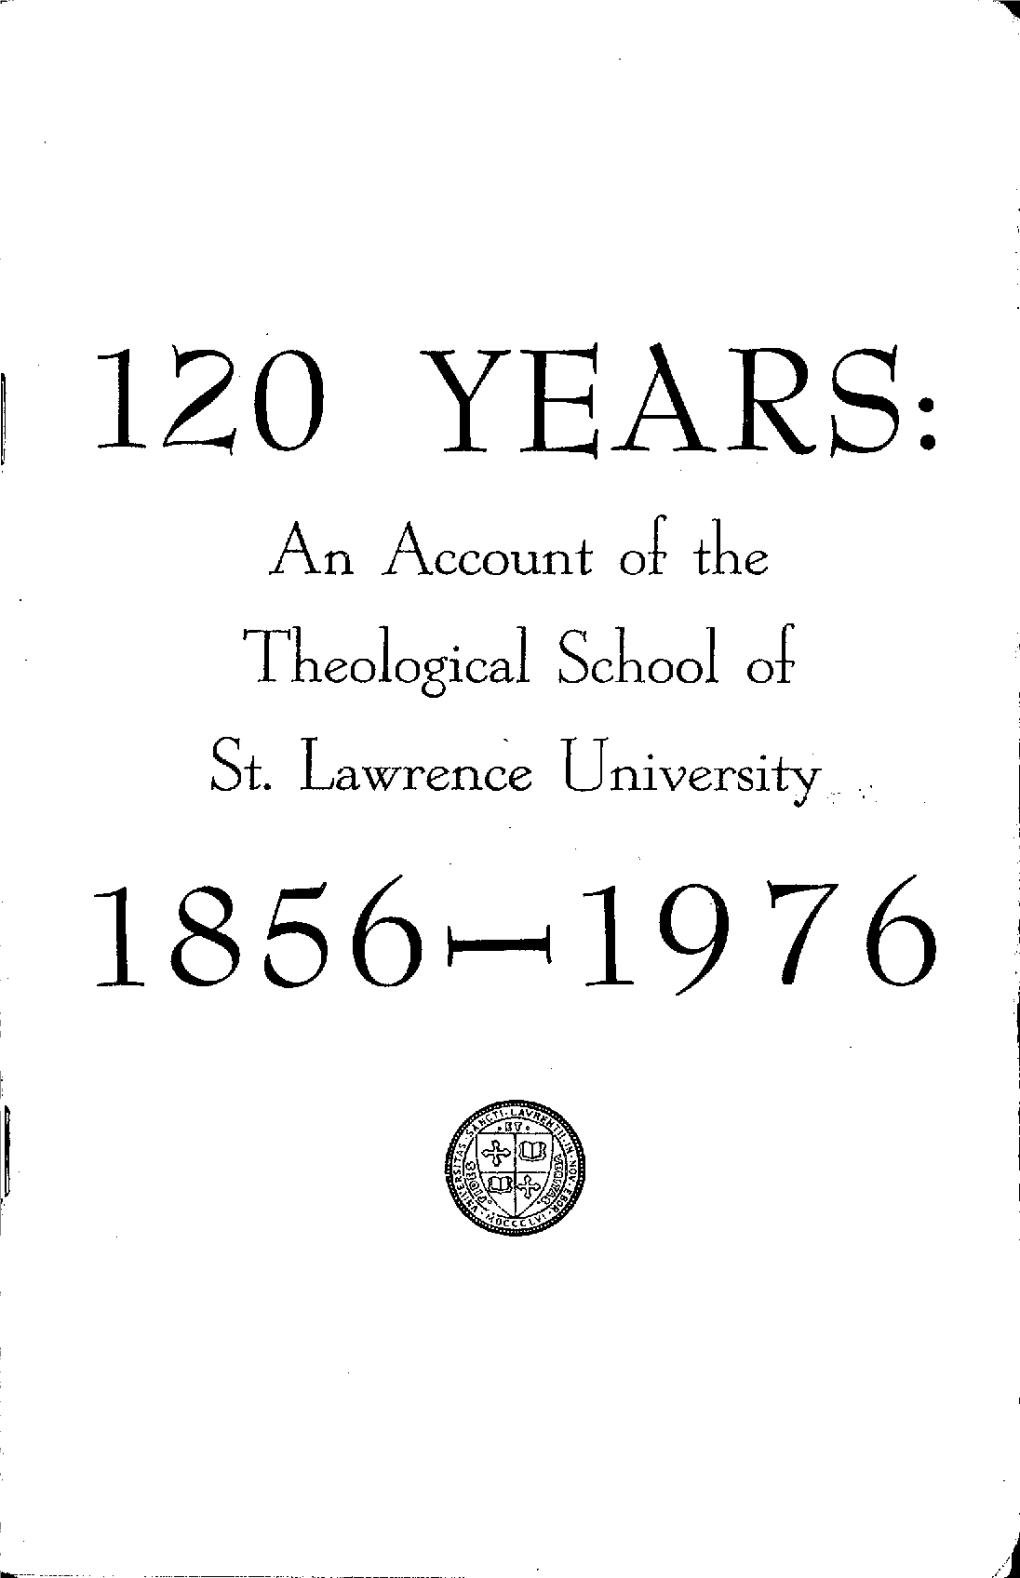 St. Lawrence University Theological School 1856-1976.Pdf